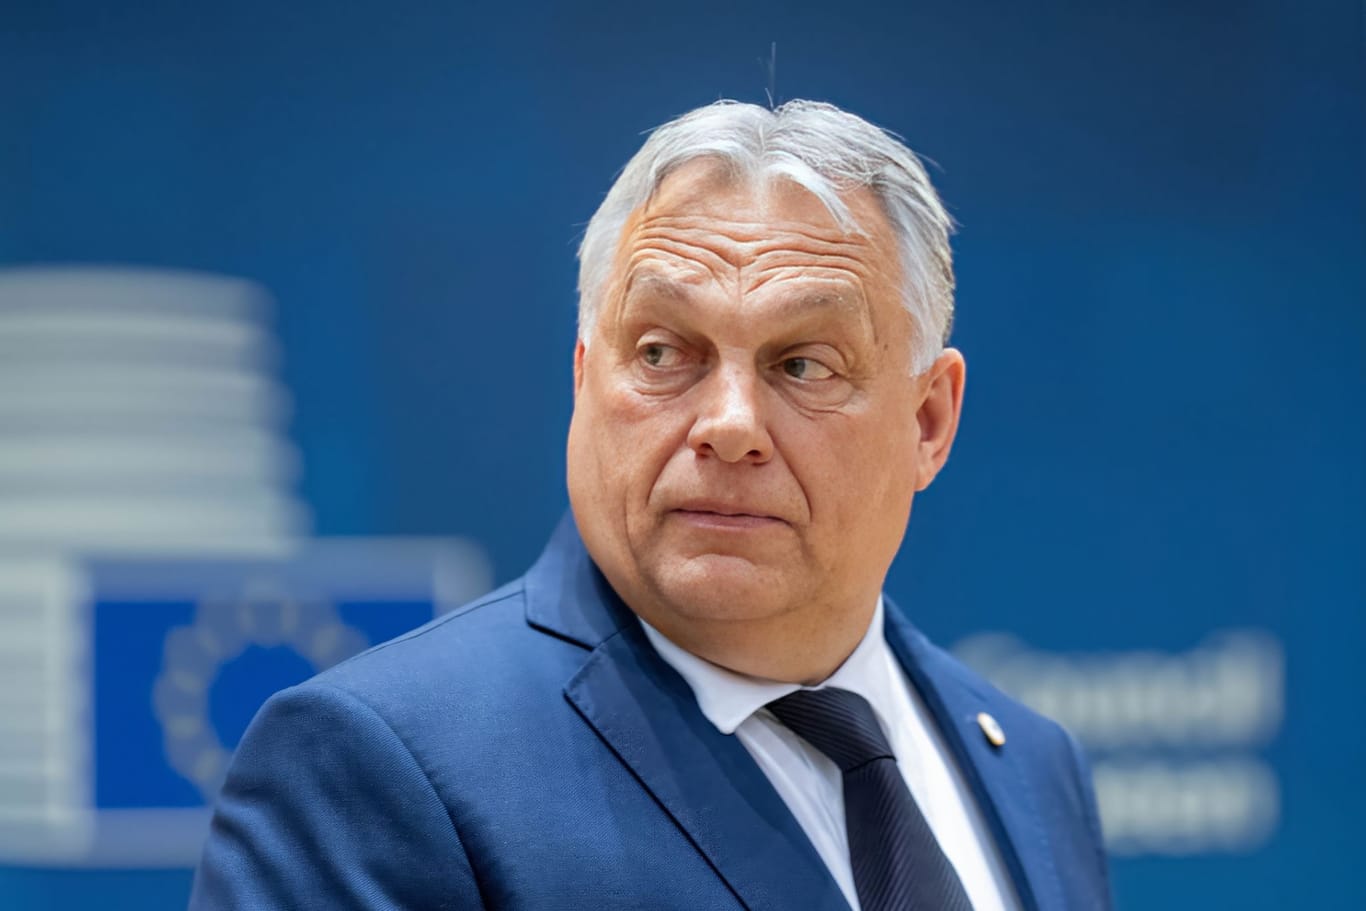 Ungarns Ministerpräsident Viktor Orban